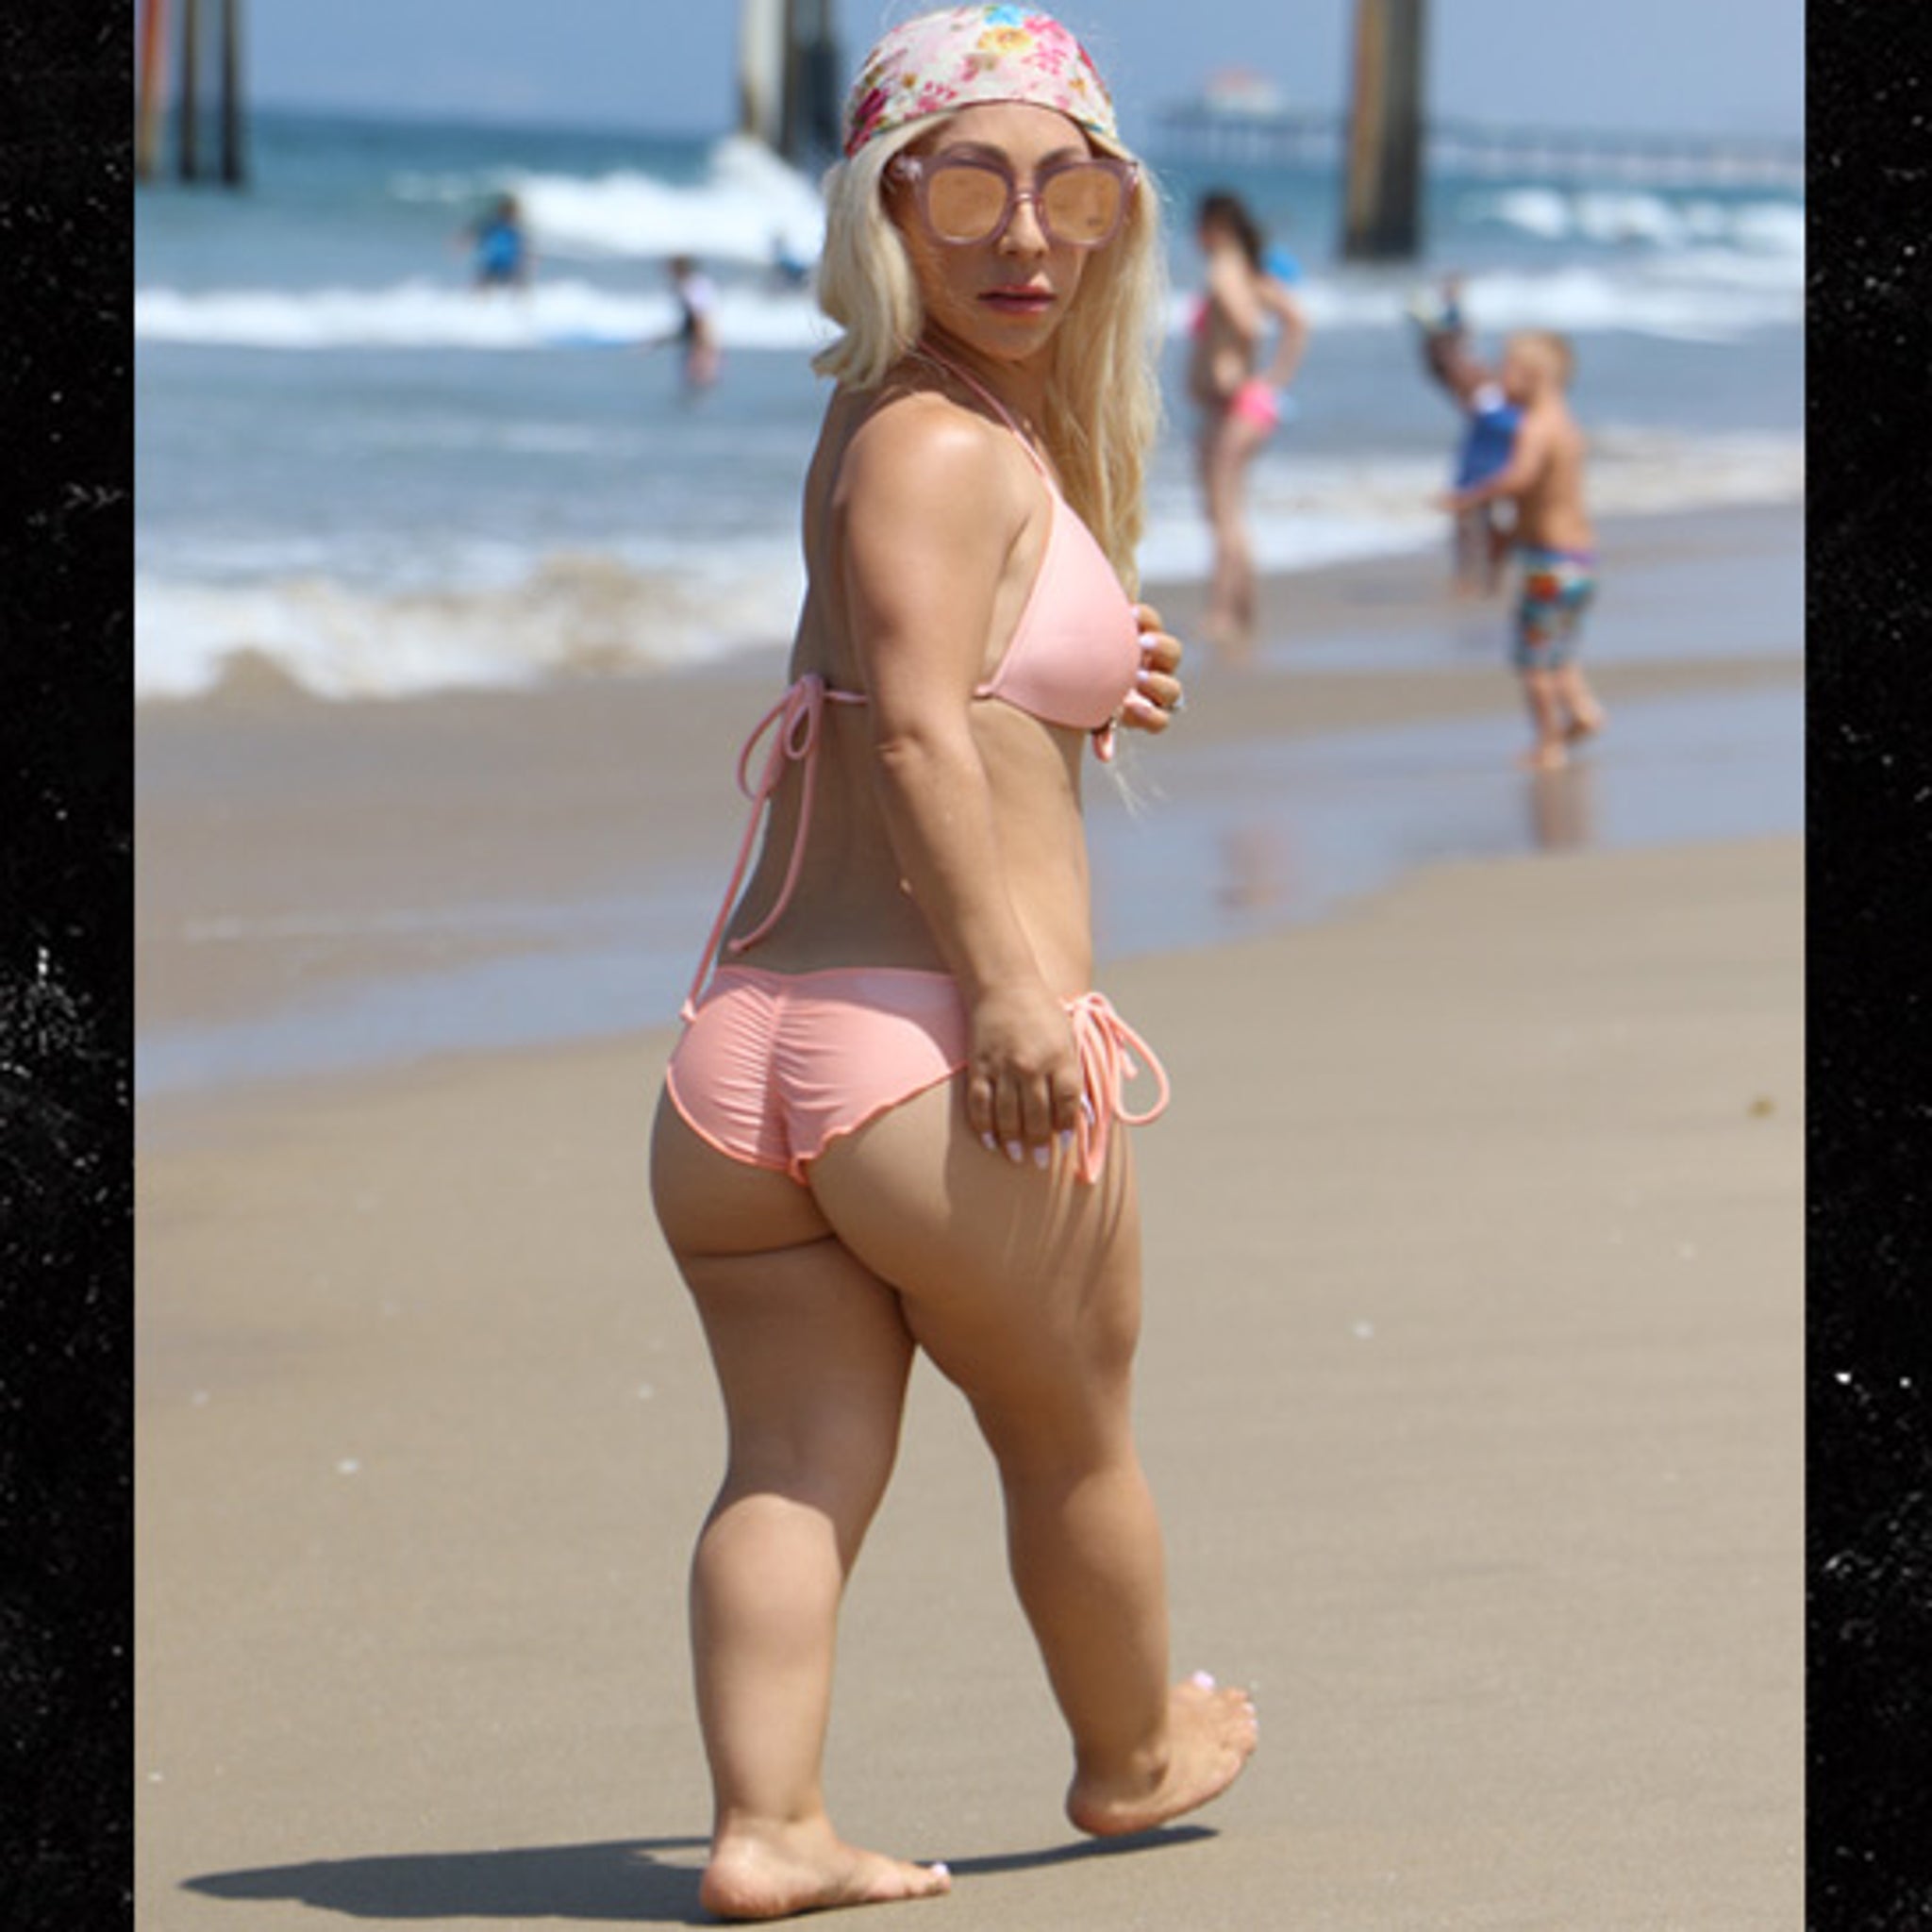 amanda levering add nude beach teenies photo